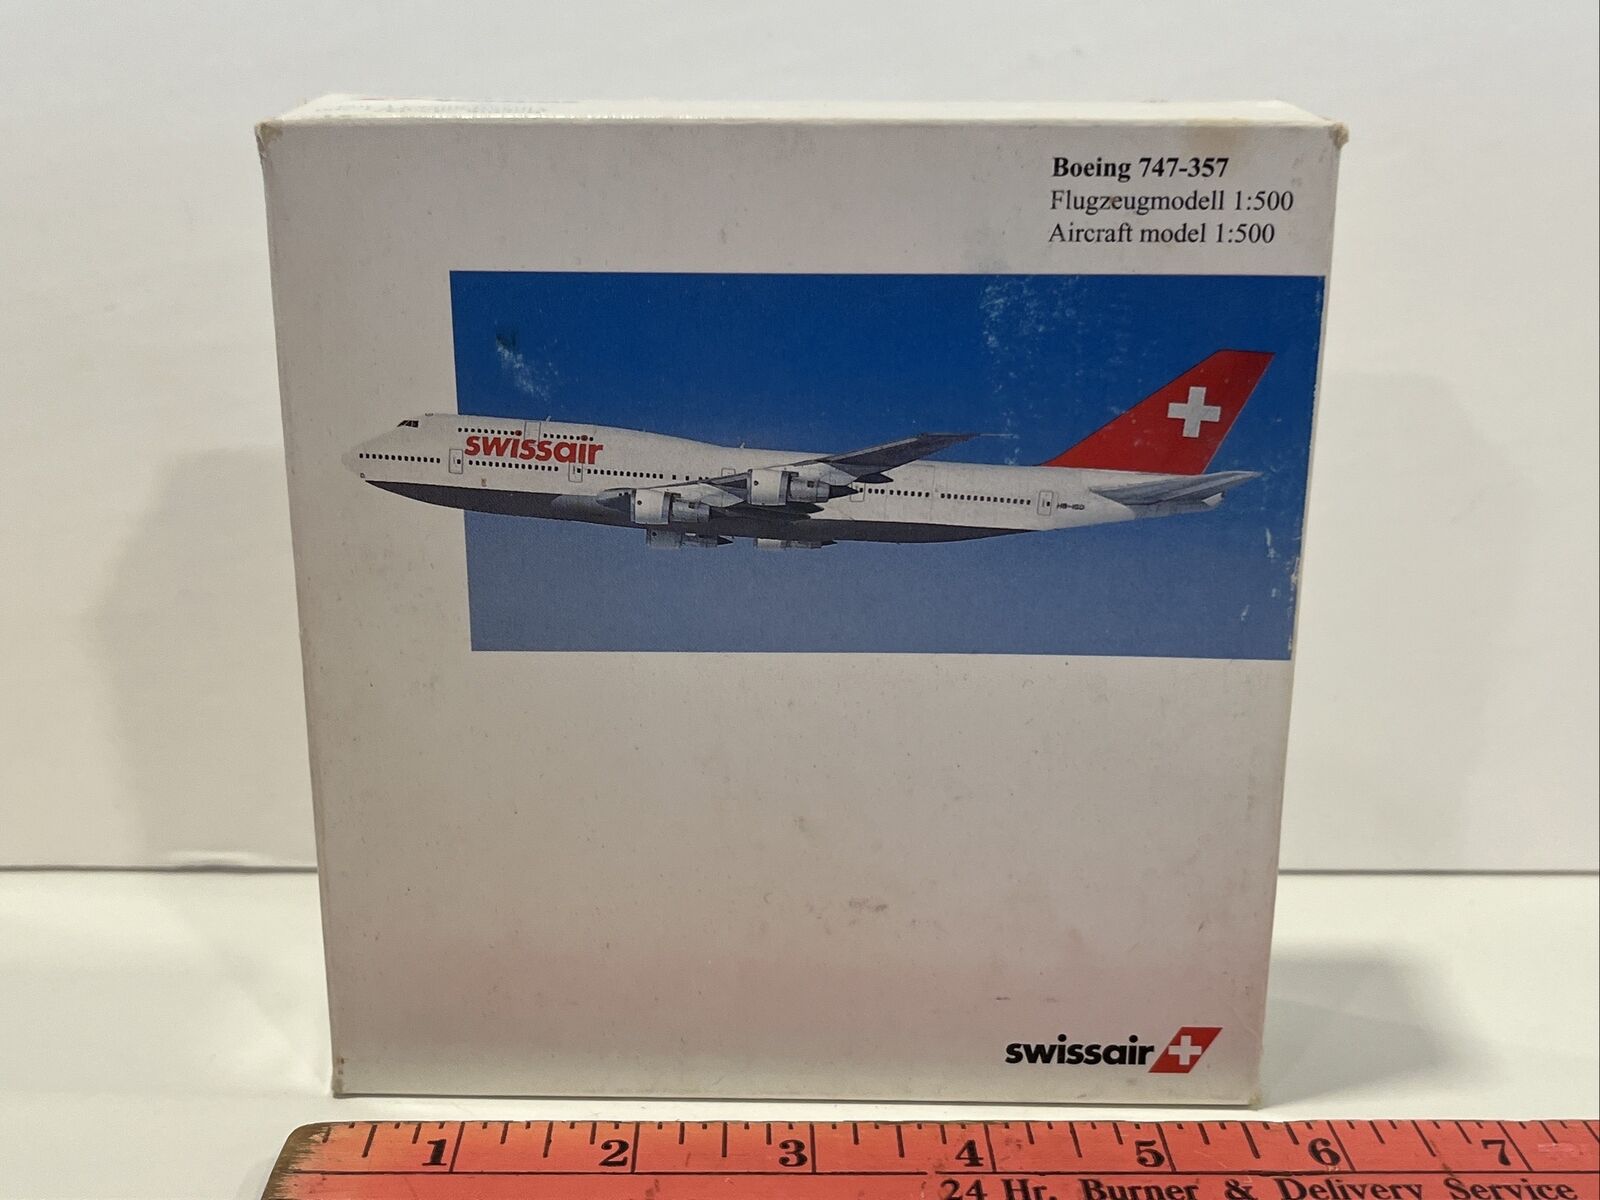 1:500 Herpa Swissair Swiss Switzerland Airlines Boeing 747 357 Scale Toy Wings